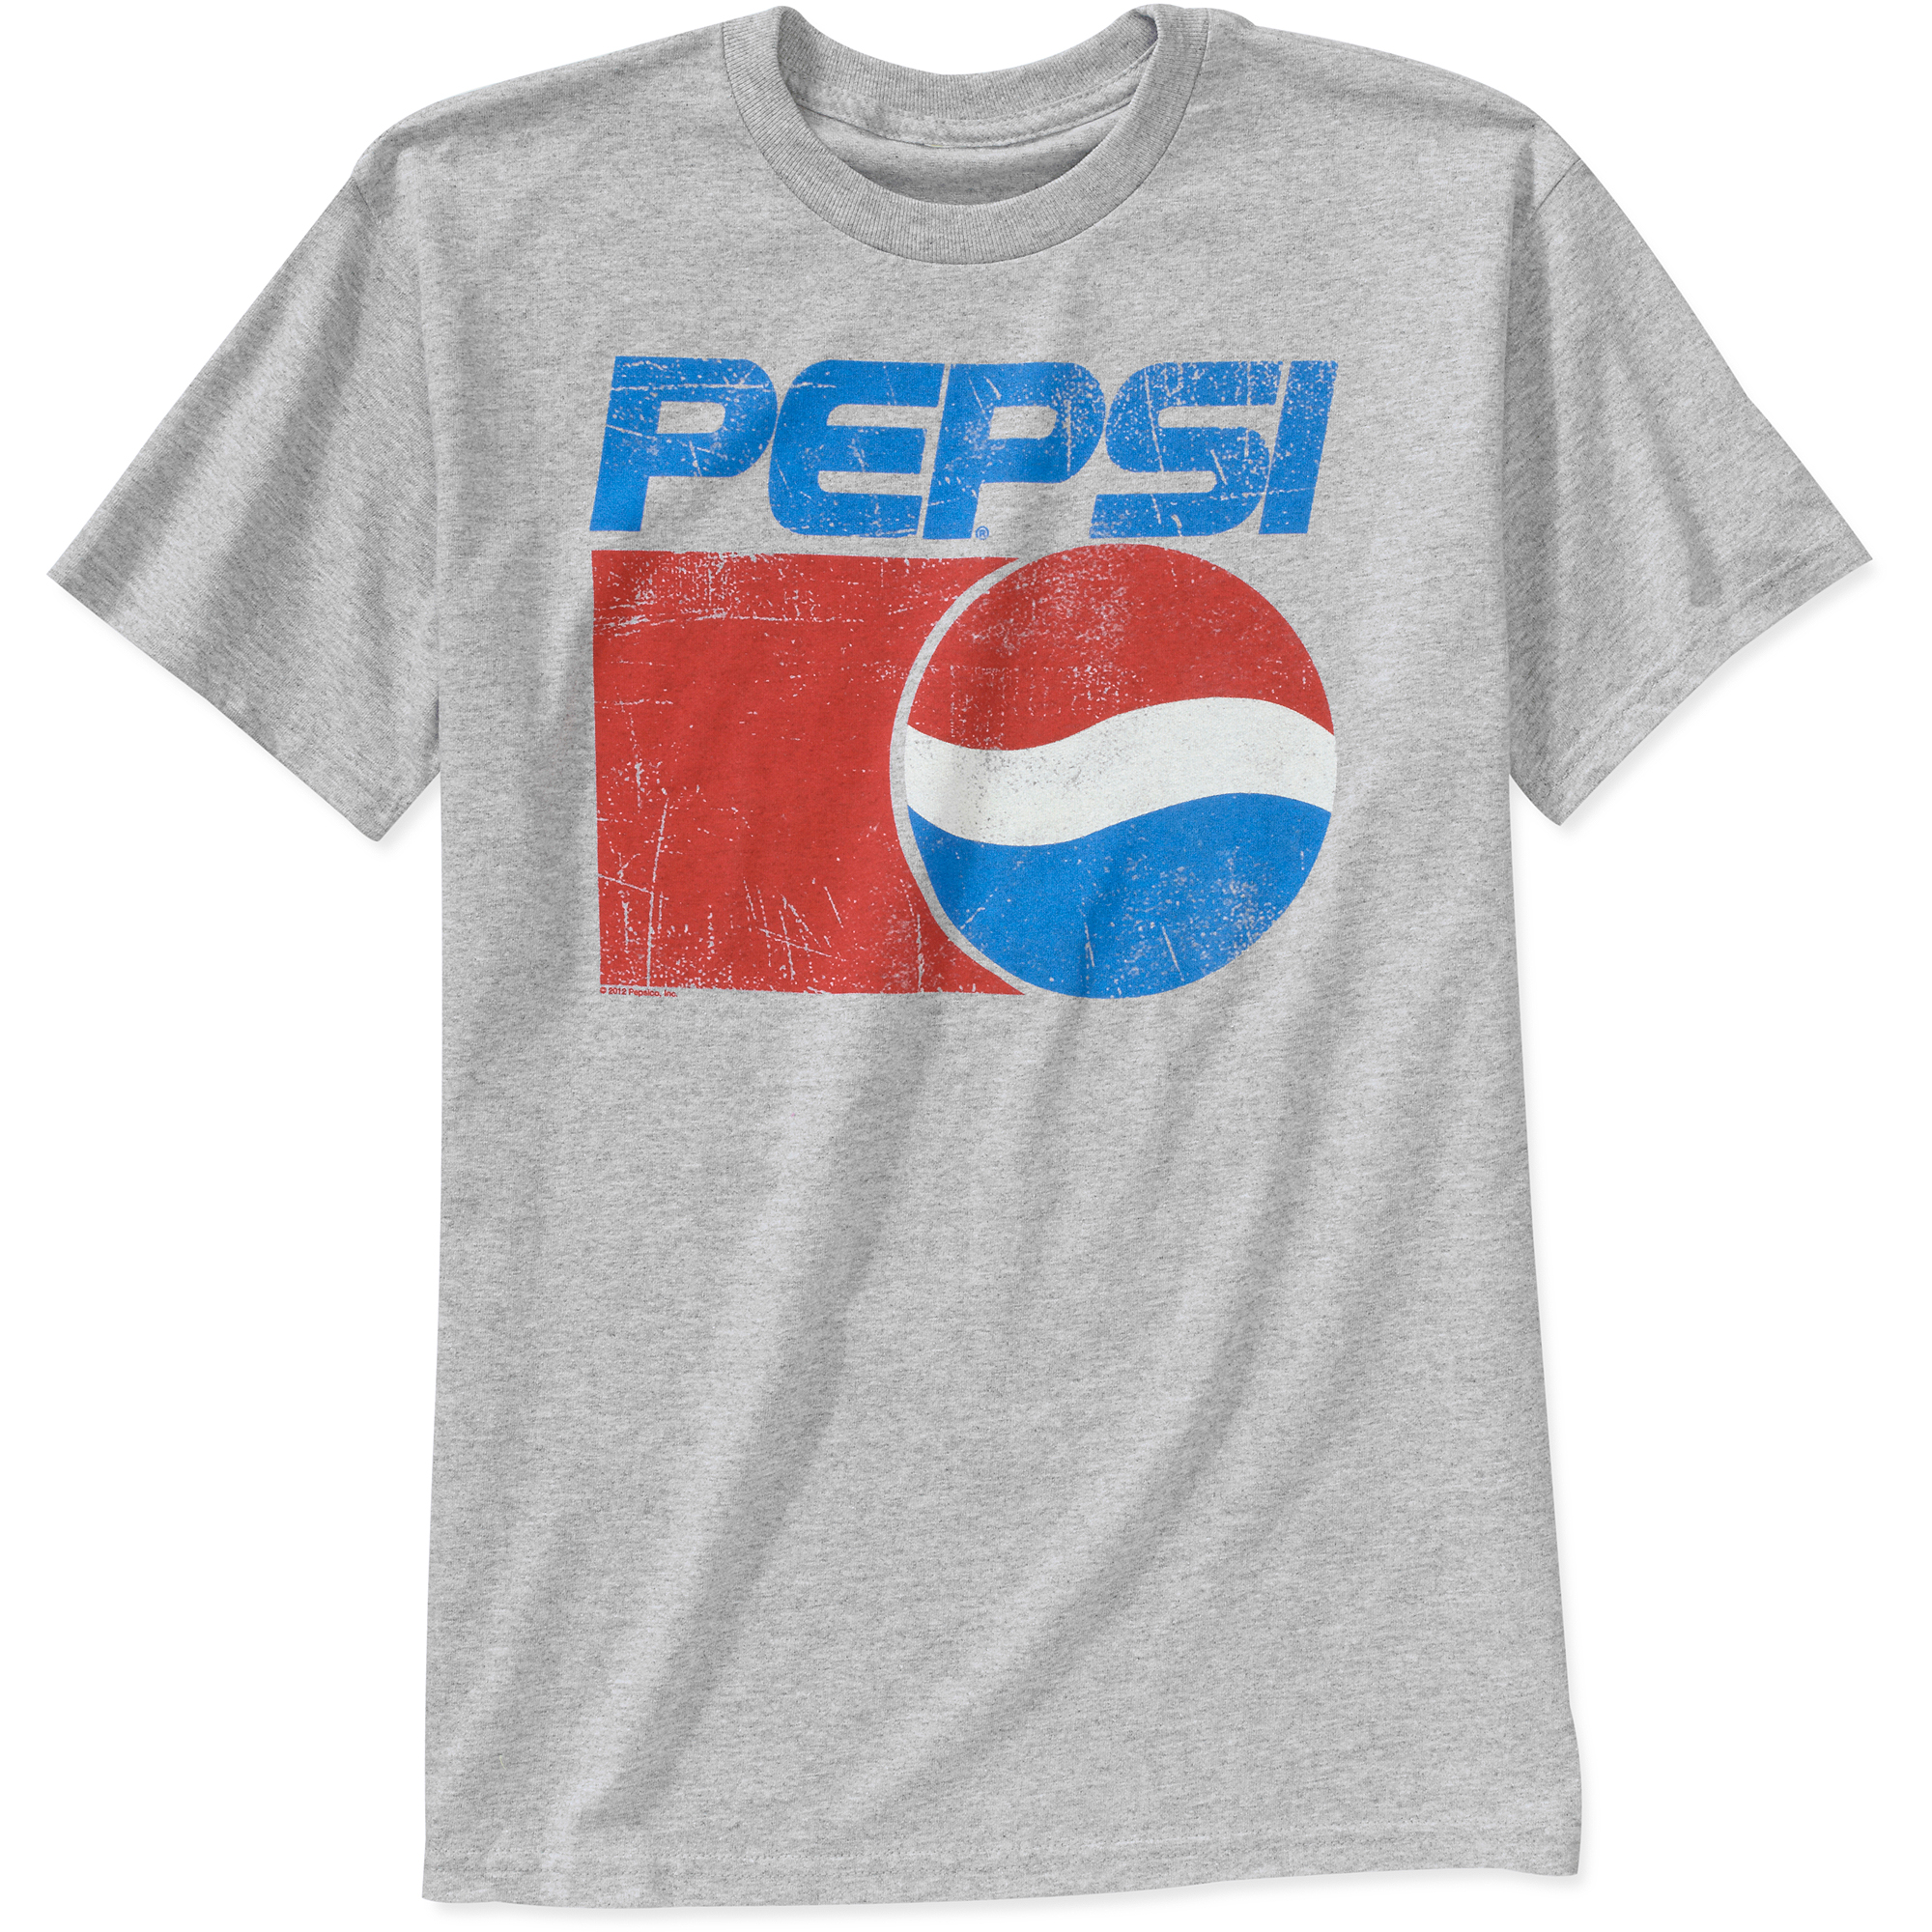 Pepsi Big Men's Graphic Tee - image 1 of 1